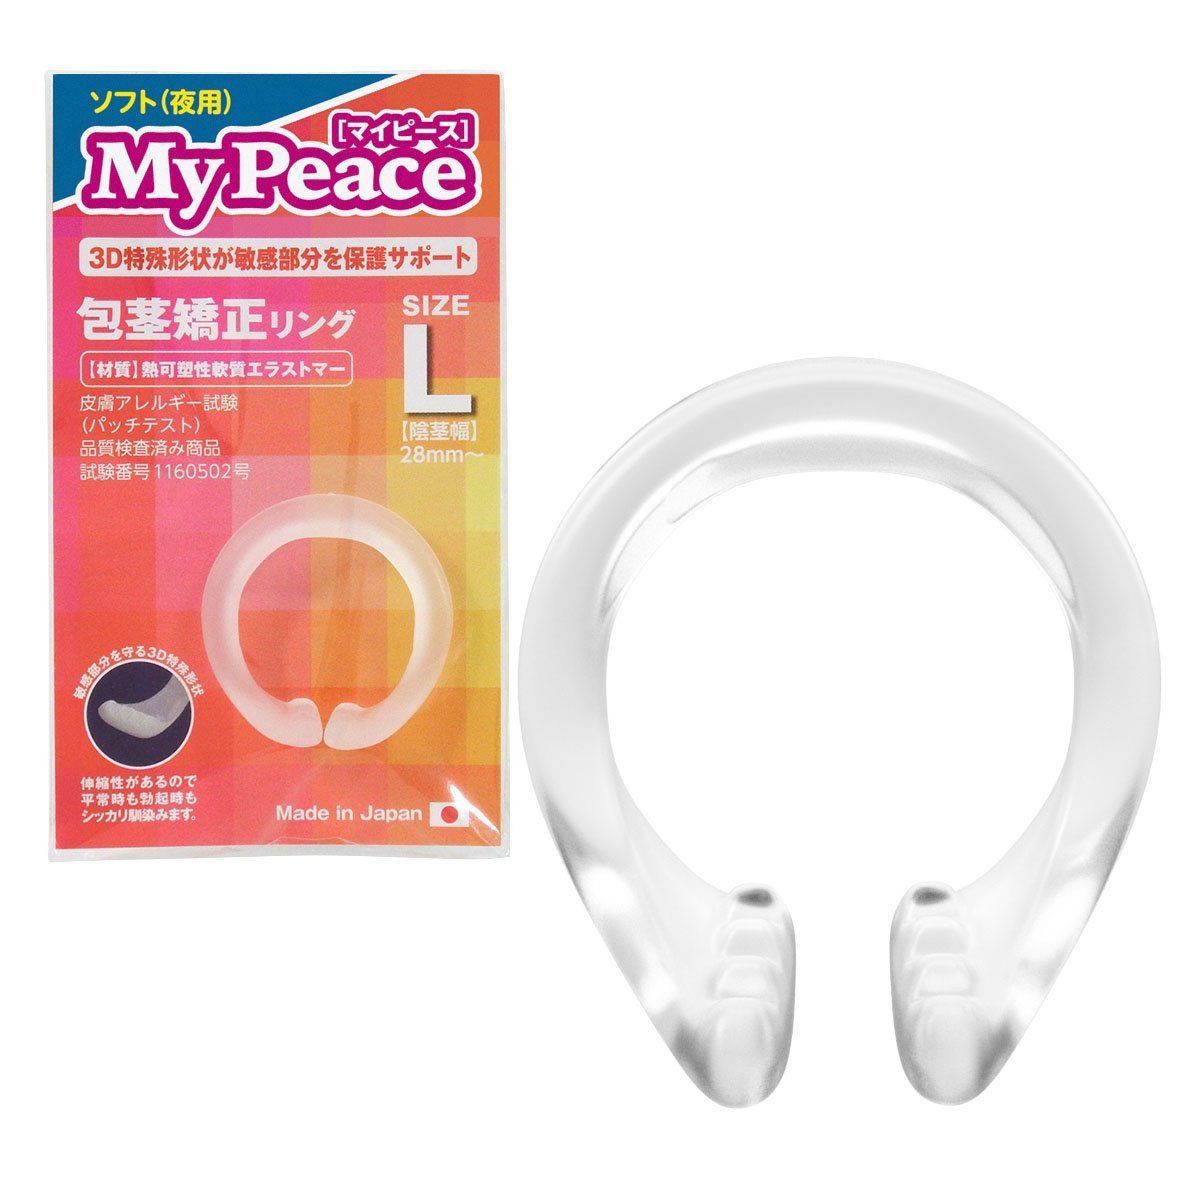 SSI JAPAN My Peace Soft 夜用標準版包莖矯正環 包莖矯正環 L 購買